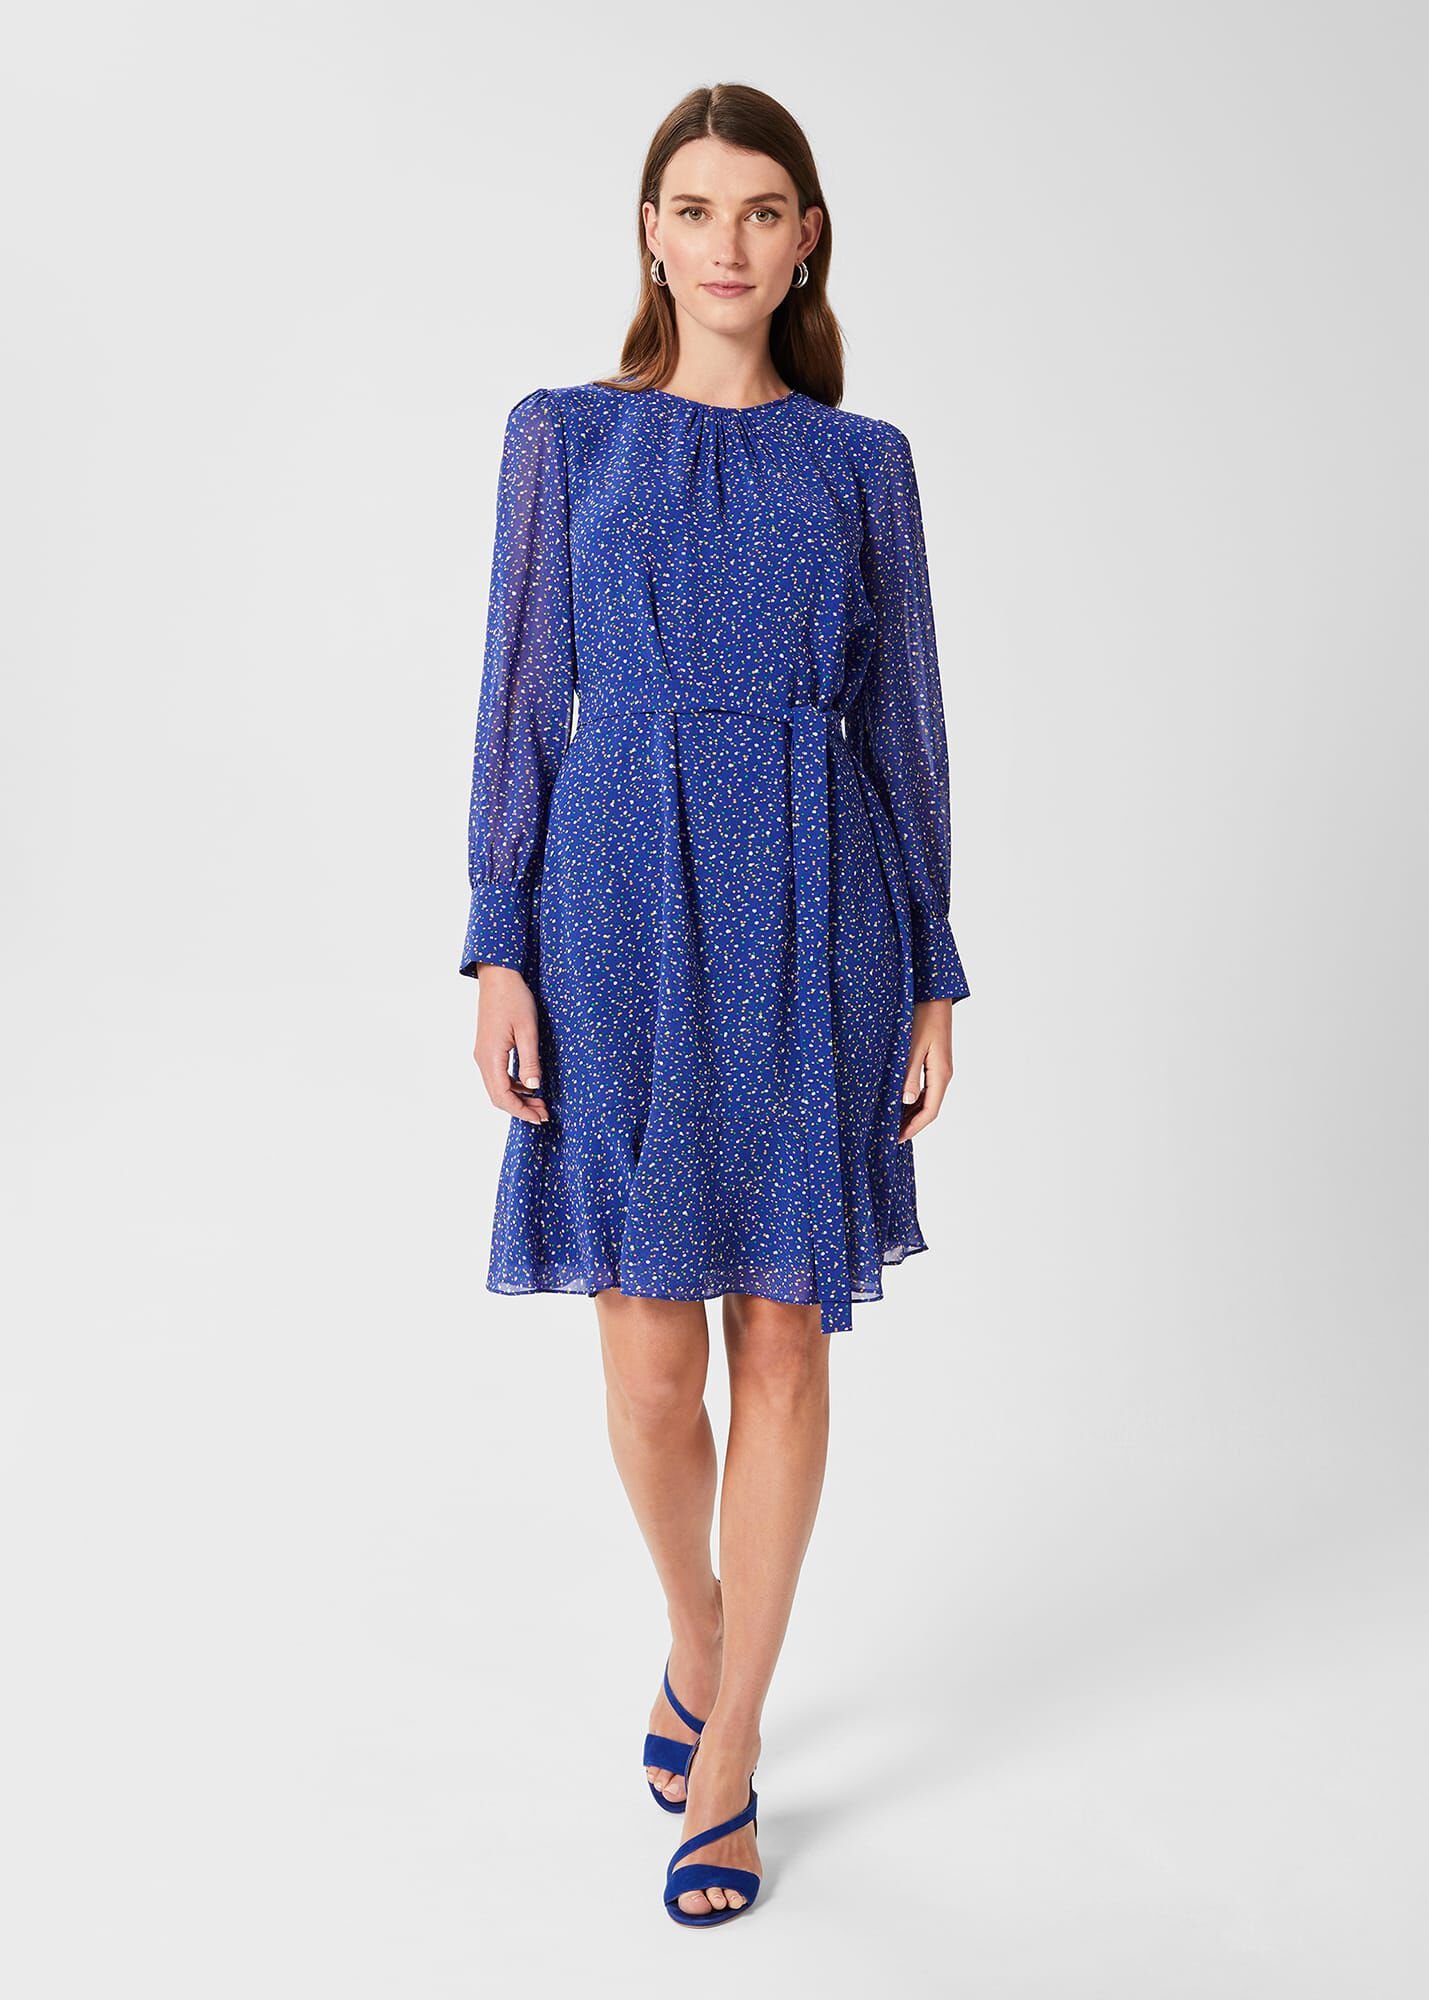 Hobbs London Frances Dress Cobalt Spot Print Recycled Material Luxury Occasionwear